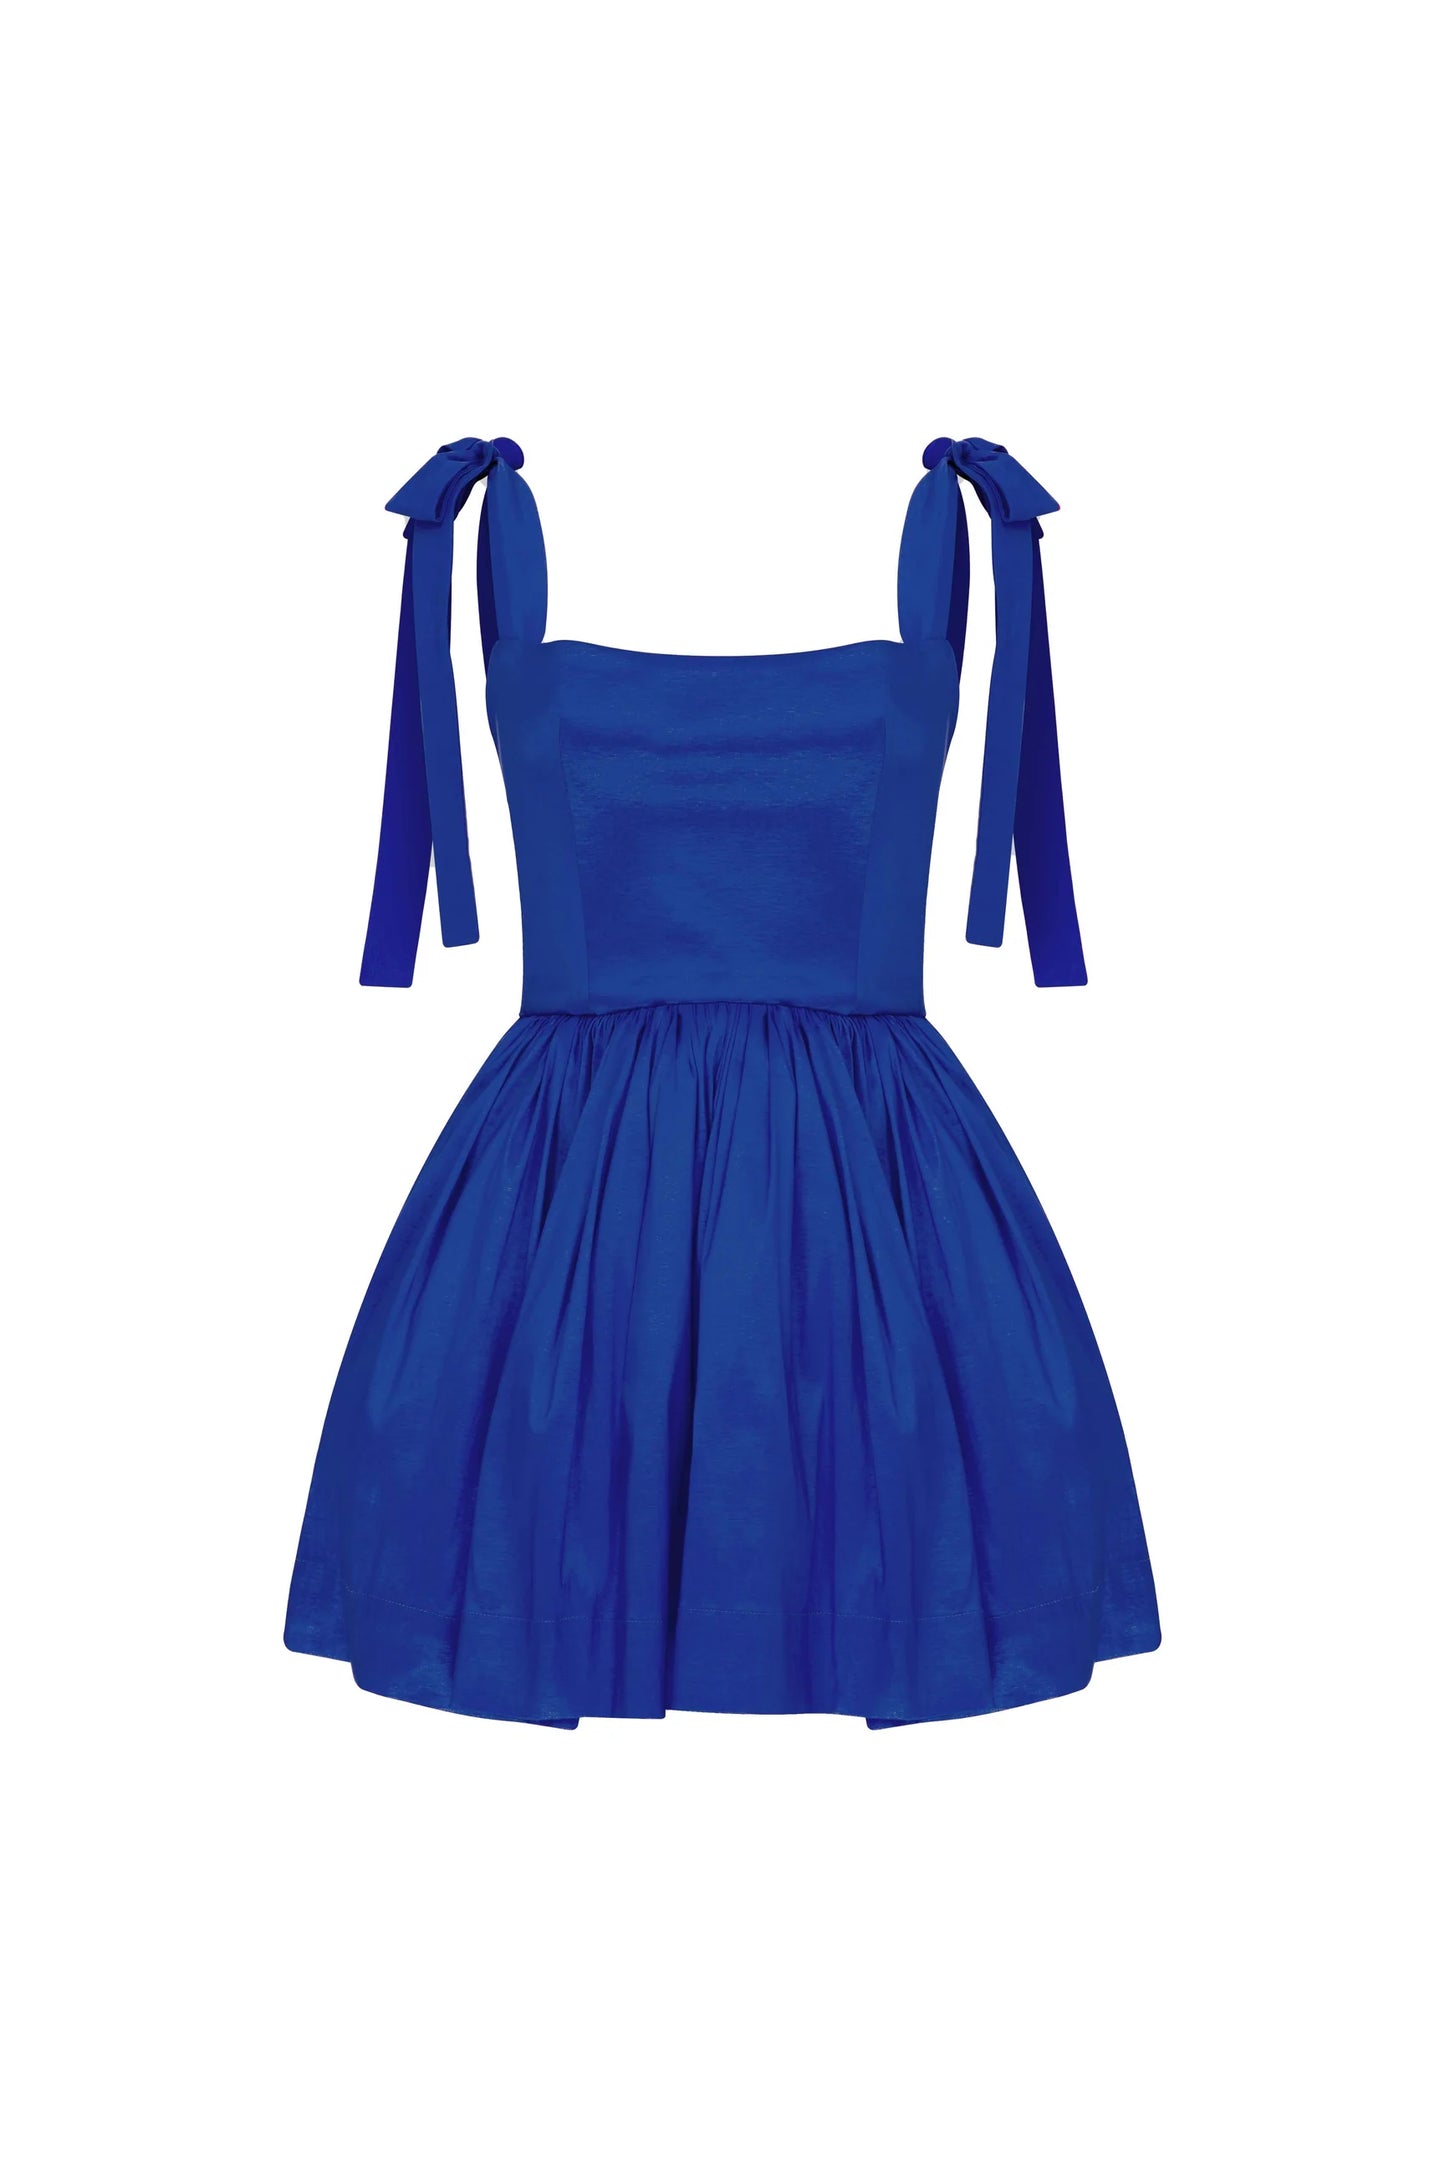 Sibby Mini Dress in Bleu